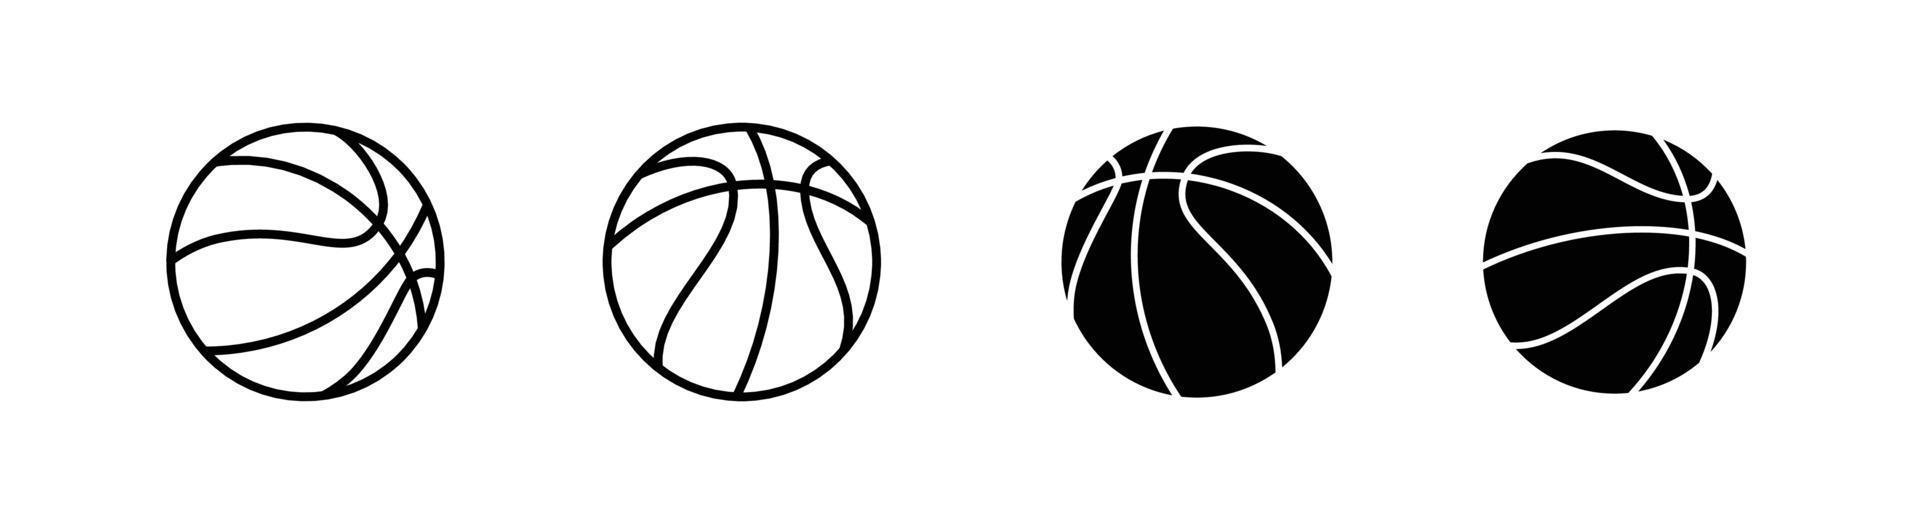 basket ikon designelement, clipart mall illustration vektor